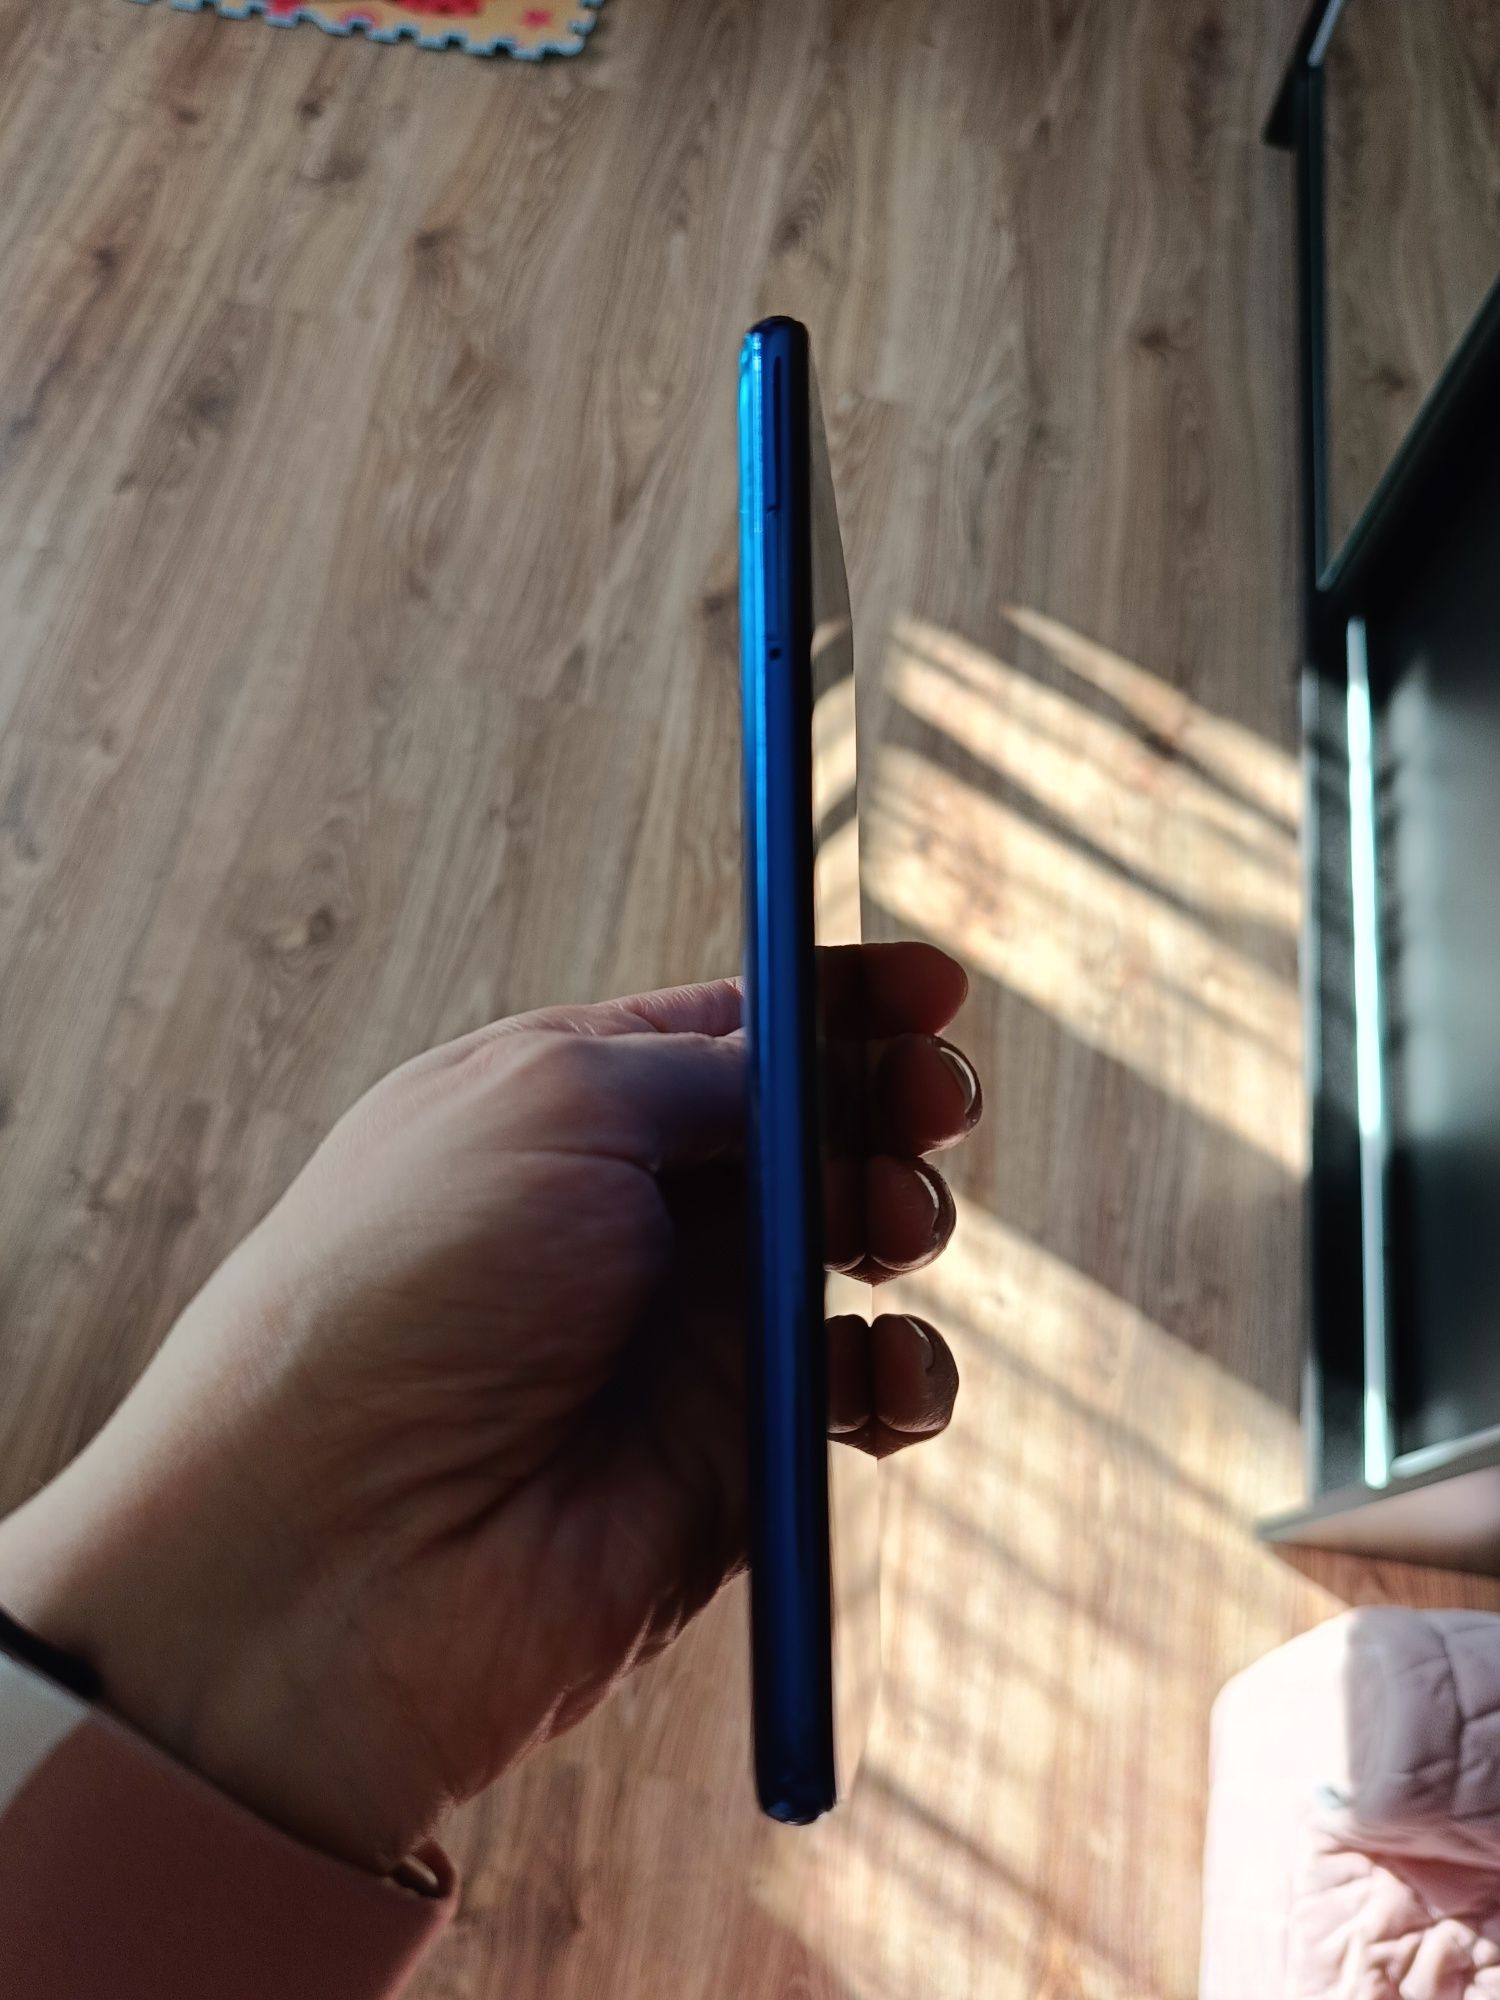 Xiaomi redmi note 8 pro 4/64 niebieski